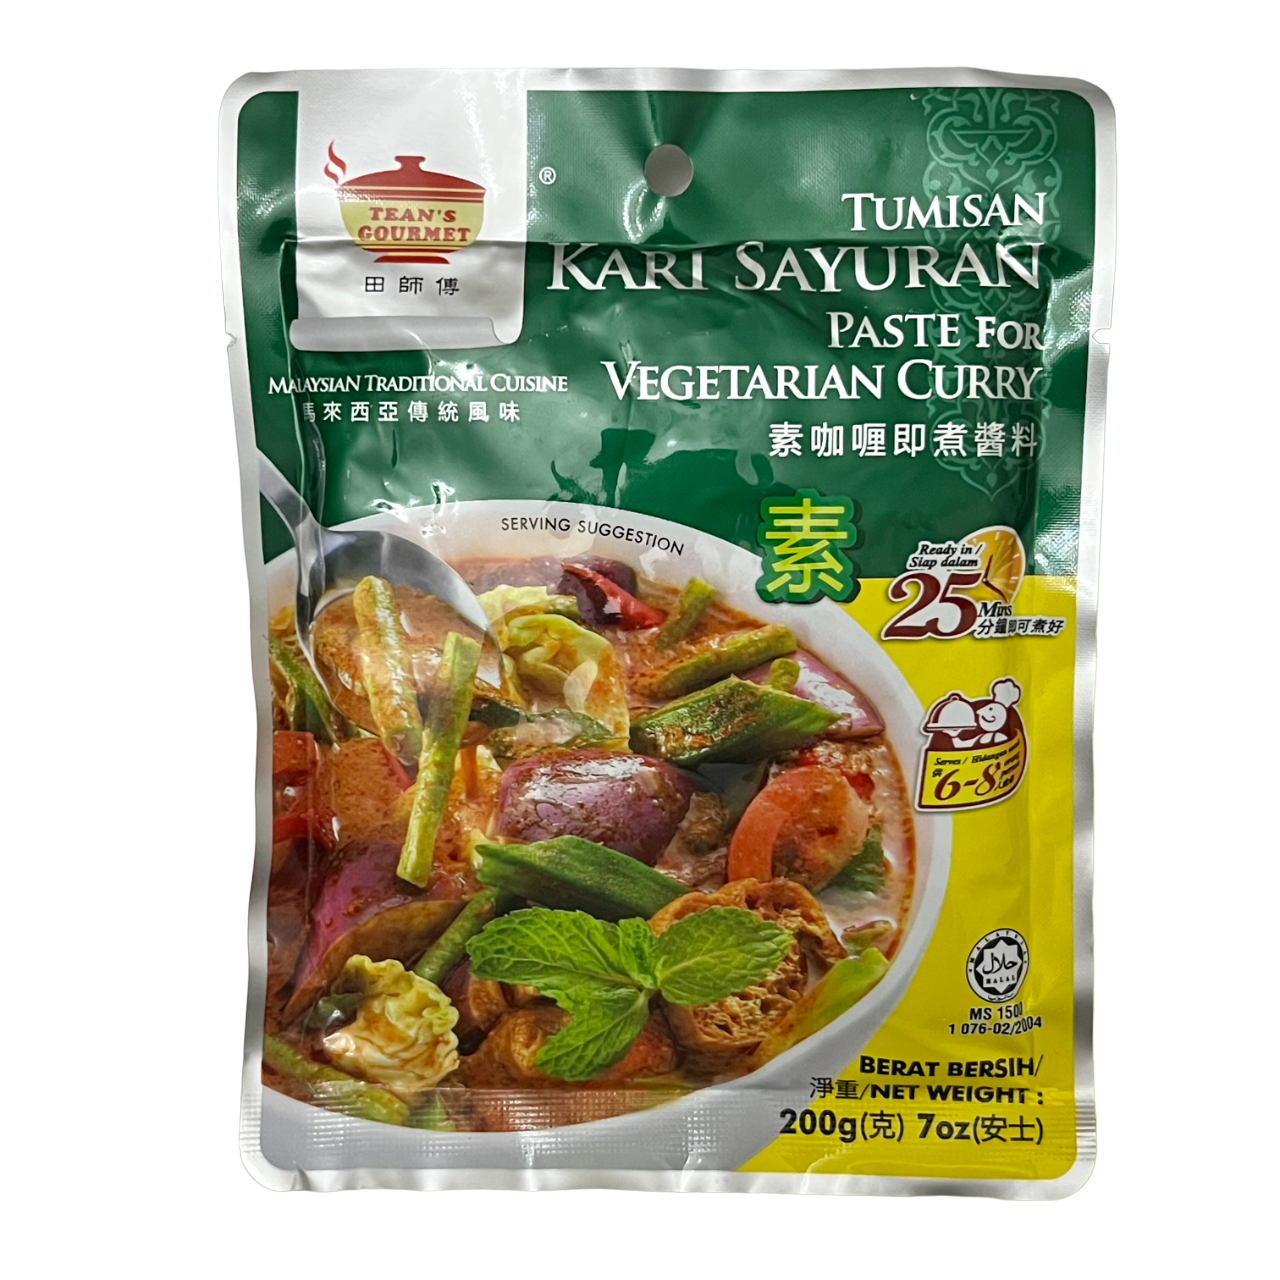 Tumisan Kari Sayuran (Vegetarian Curry Paste) Malaysian Cuisine